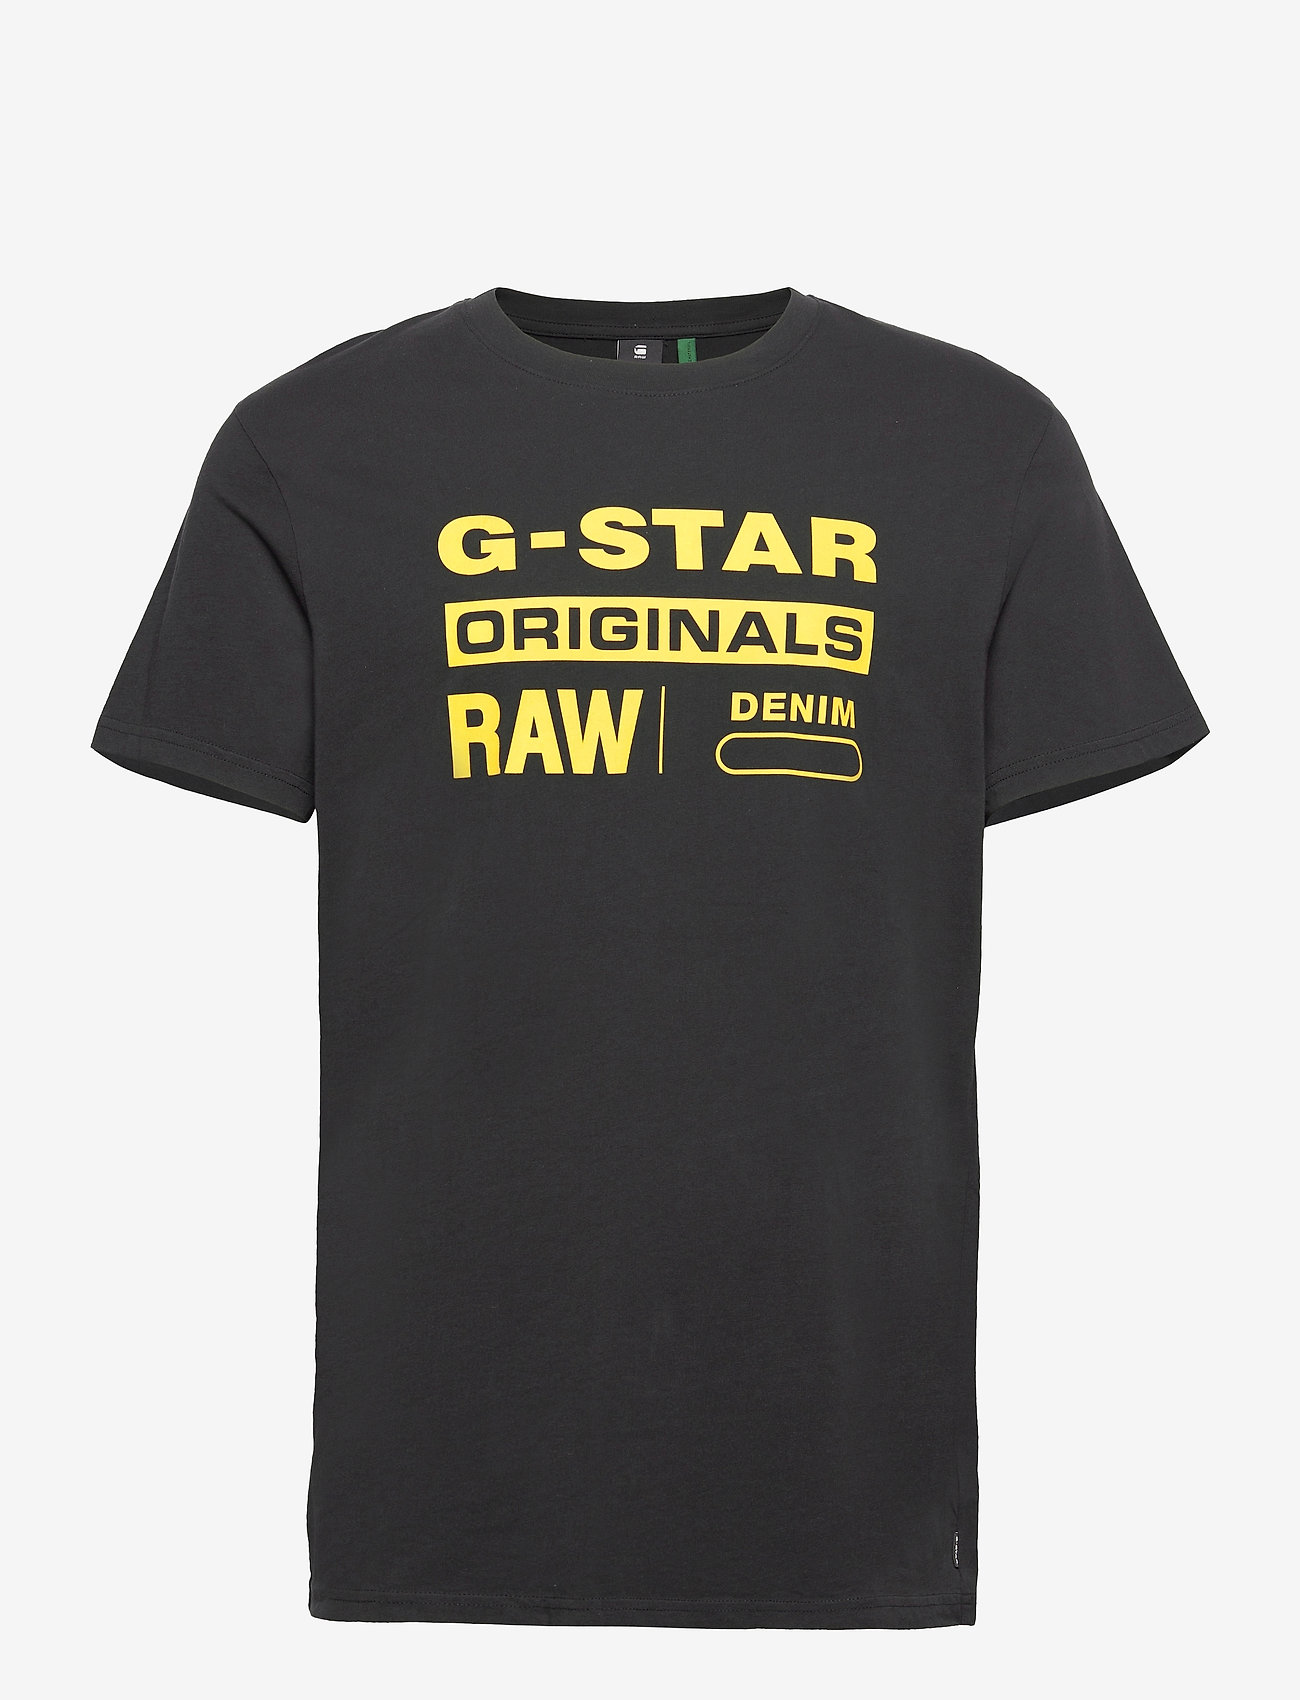 G-Star RAW - Graphic 8 r t s\s - zemākās cenas - dk black - 0